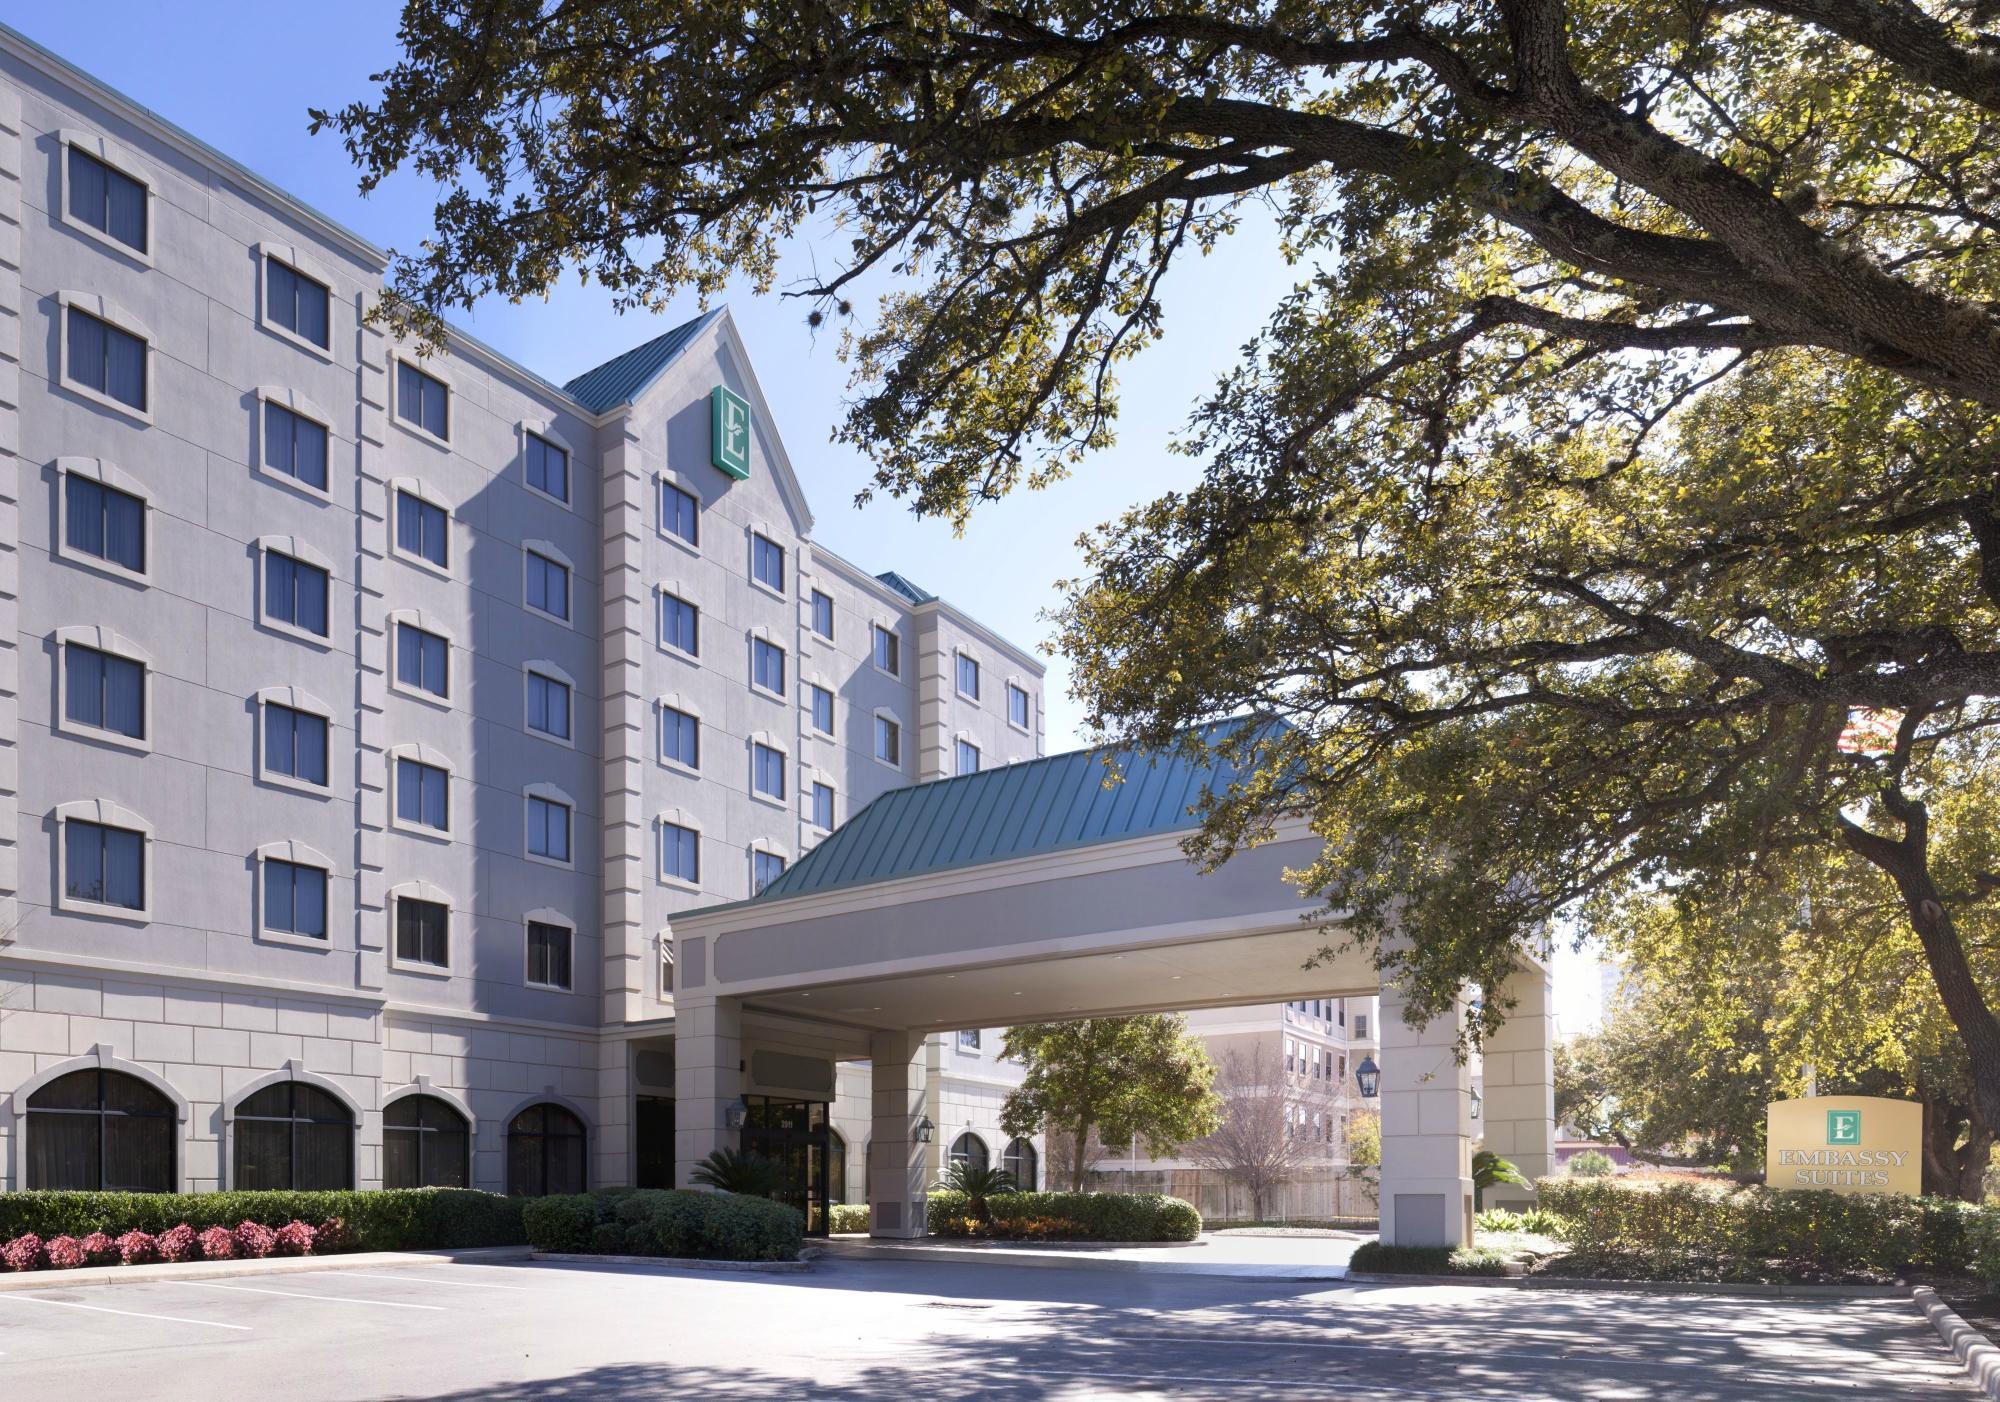 Photo of Embassy Suites by Hilton Houston Near the Galleria, Houston, TX